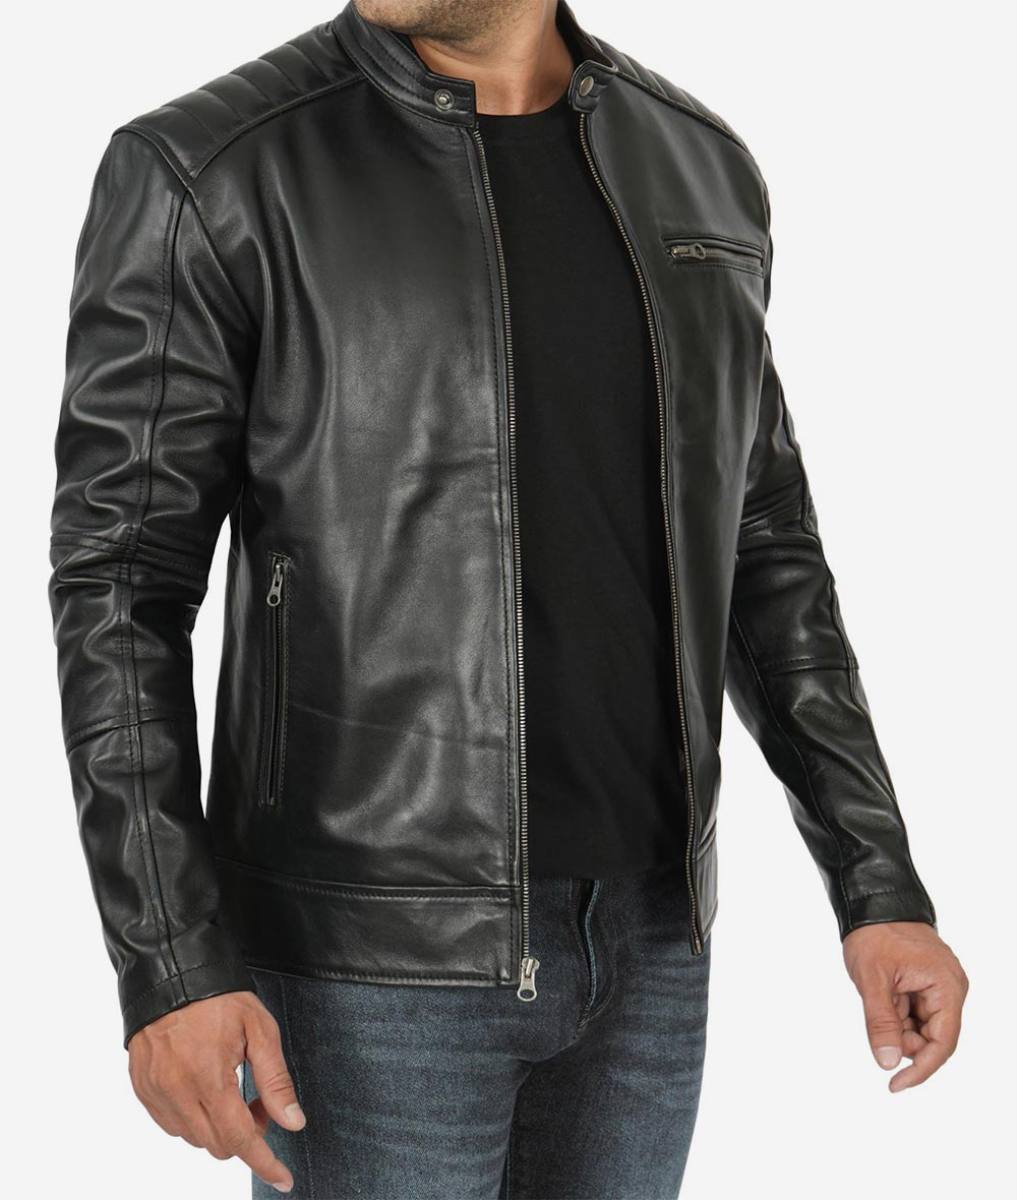 Black_Leather_Jacket_With_Padded_Shoulder